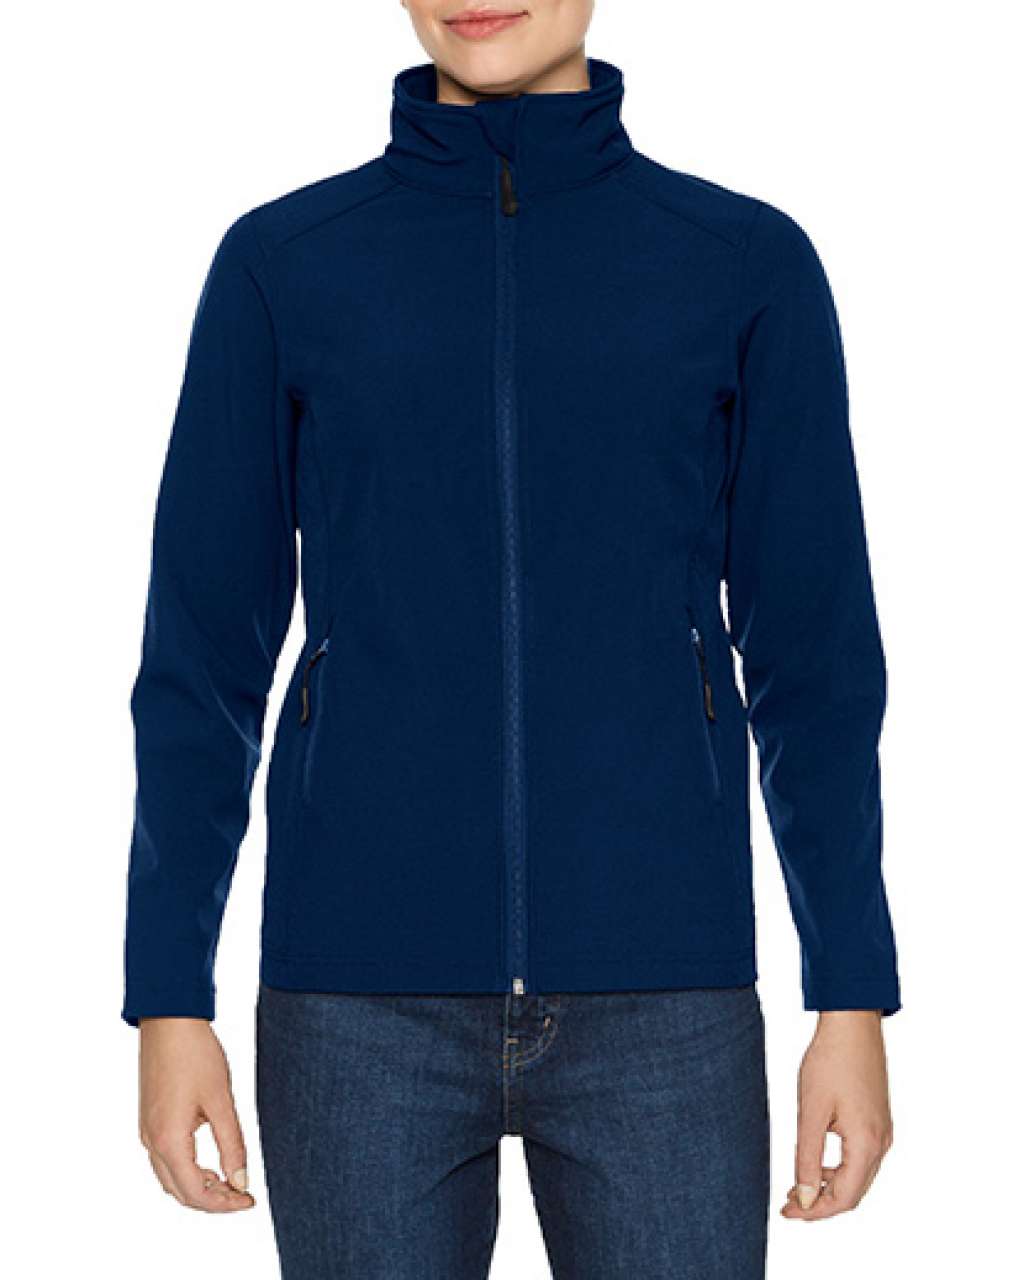 Gildan Hammer Ladies Softshell Jacket - blau